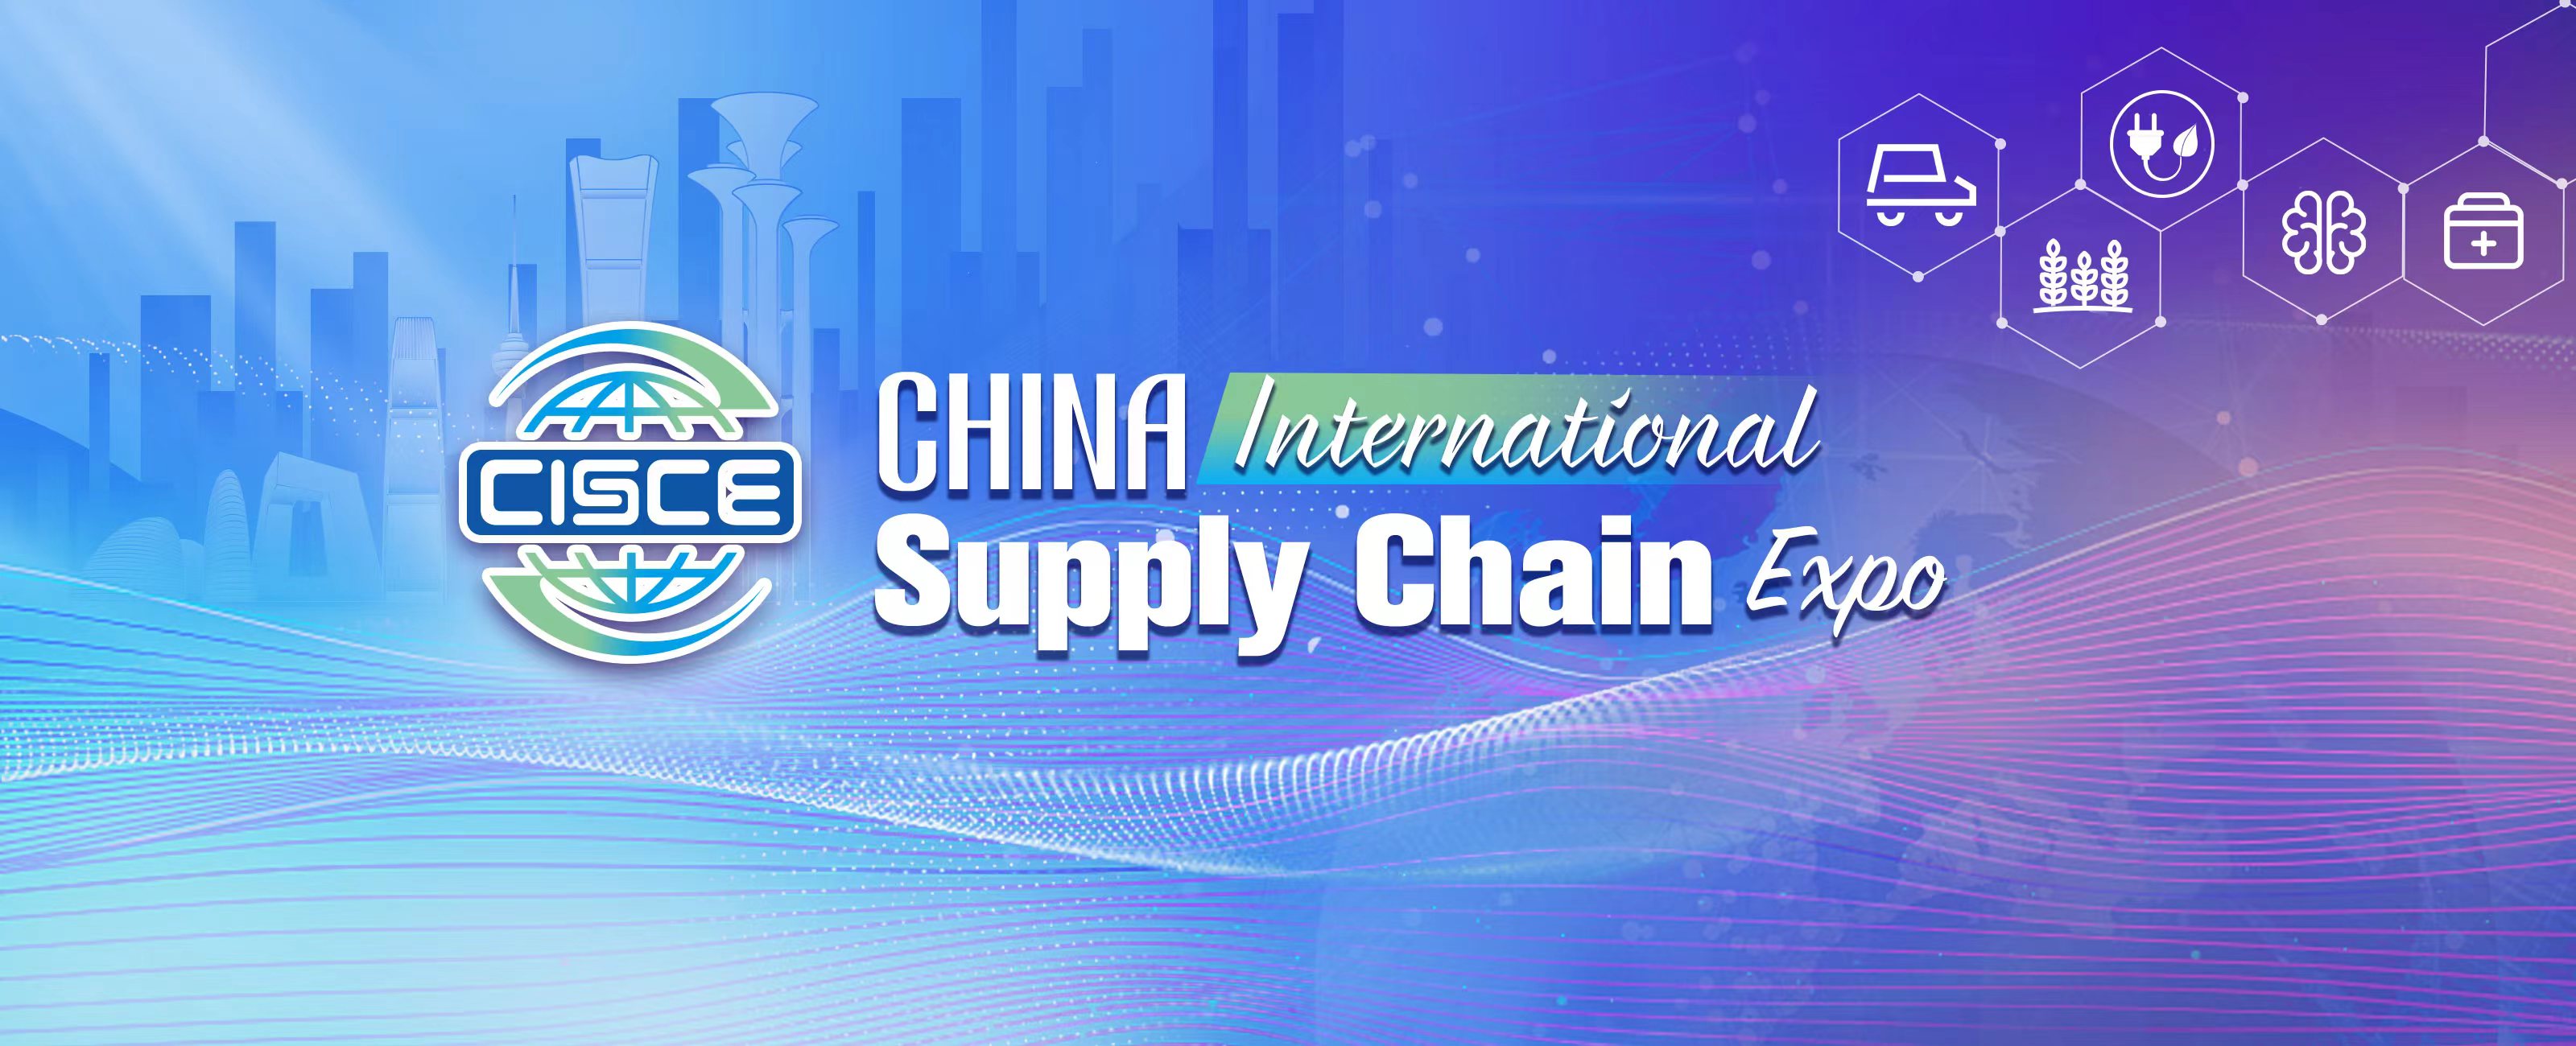 China International Supply Chain Expo